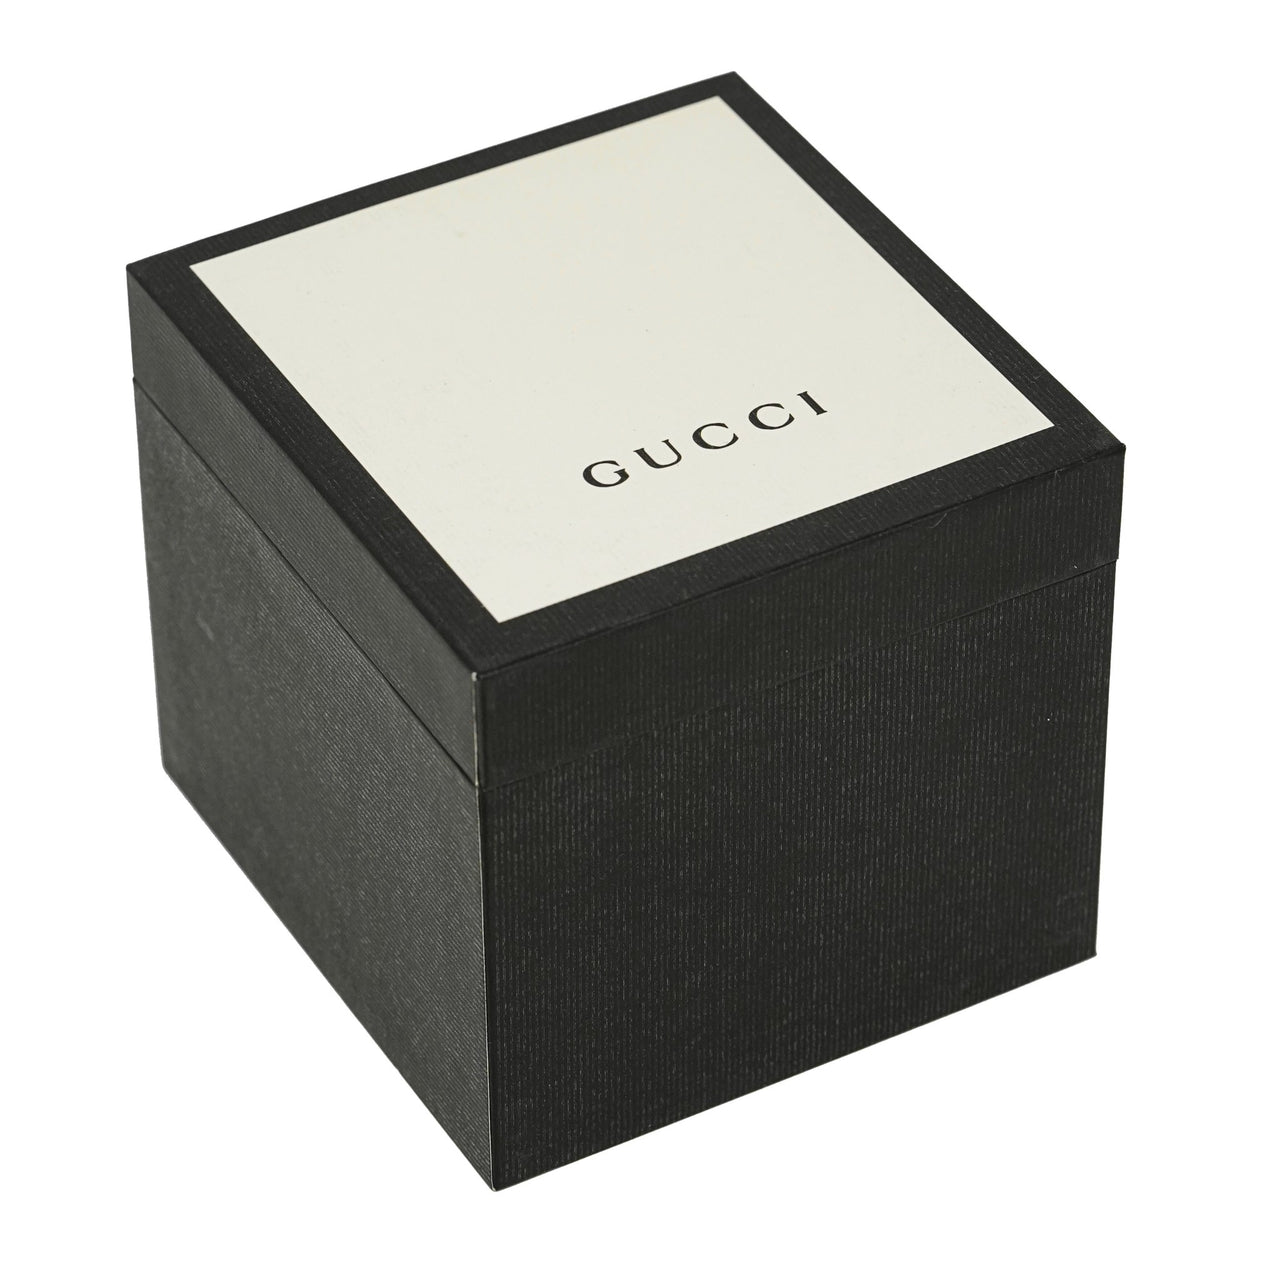 Gucci Ladies Watch G Gucci Silver YA125407 - Watches & Crystals